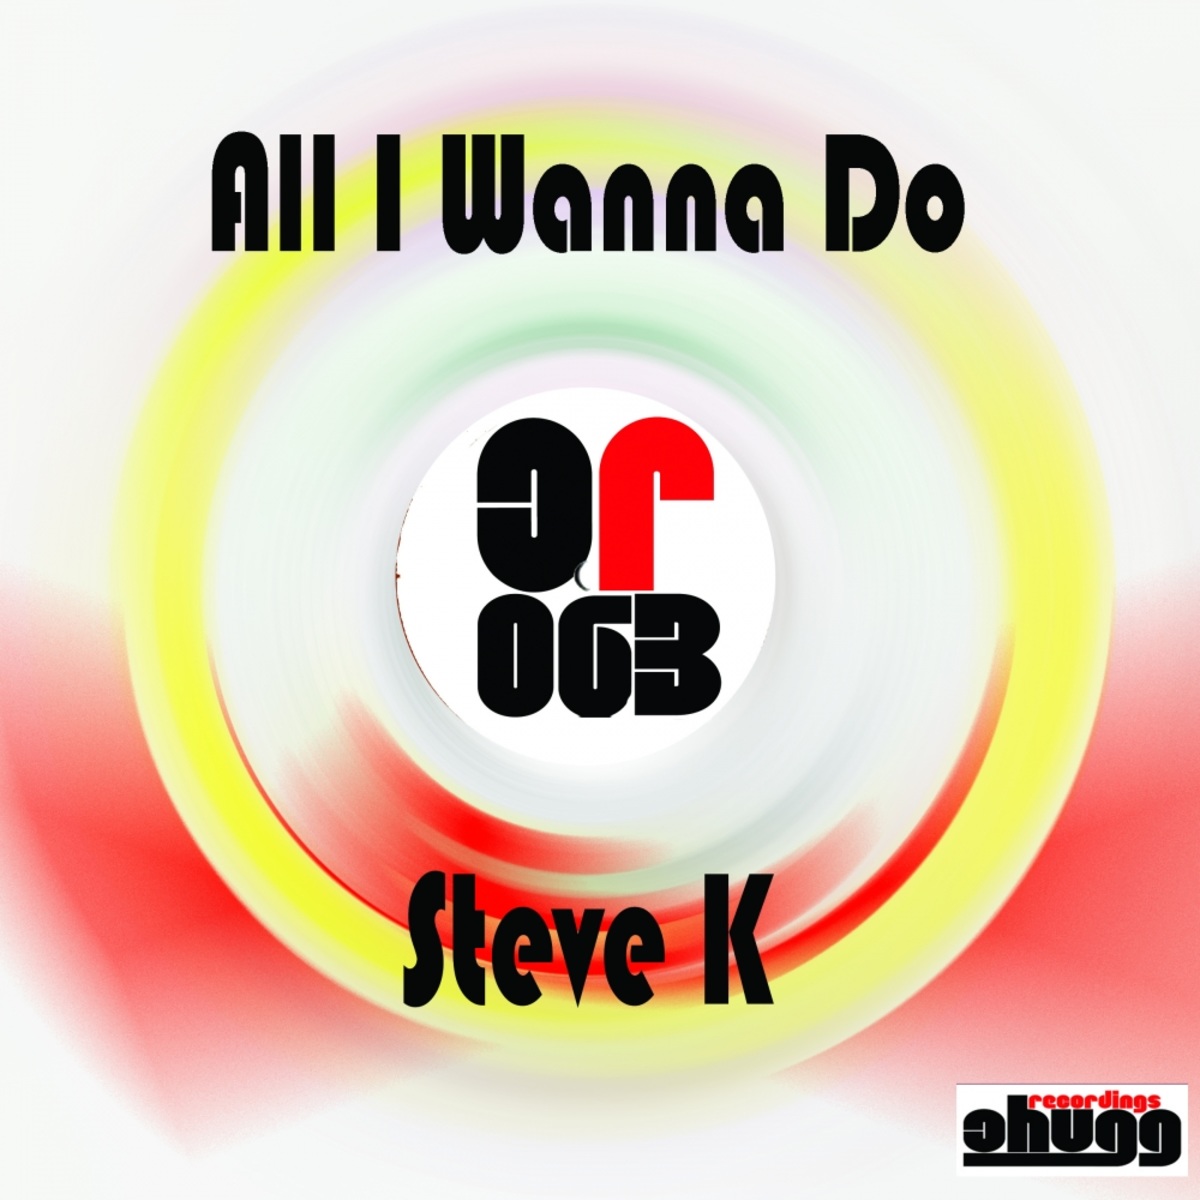 Steve K - All I Wanna Do / Chugg Recordings